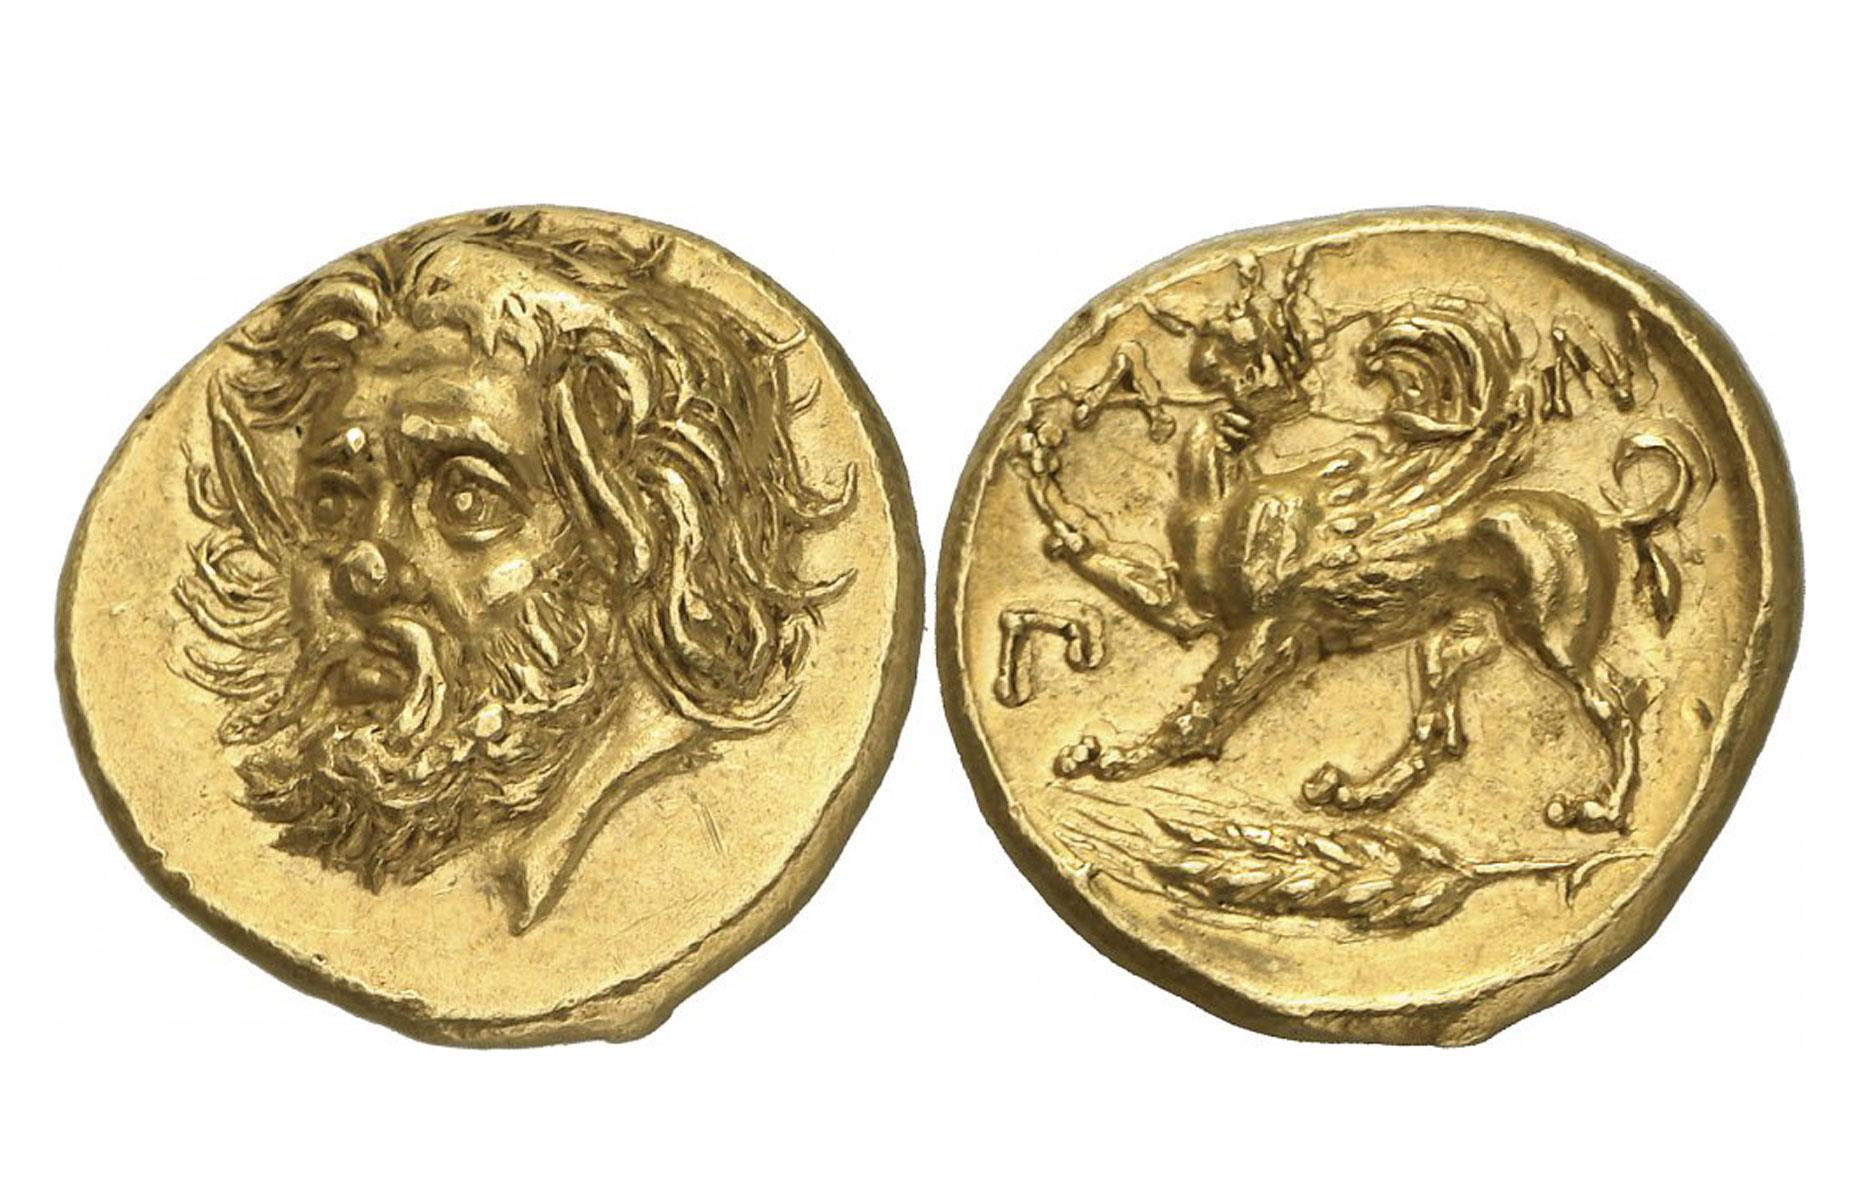 350-300 BC Pantikapaion Gold Stater, Ancient Greece: $3,802,500 (£3.1m)